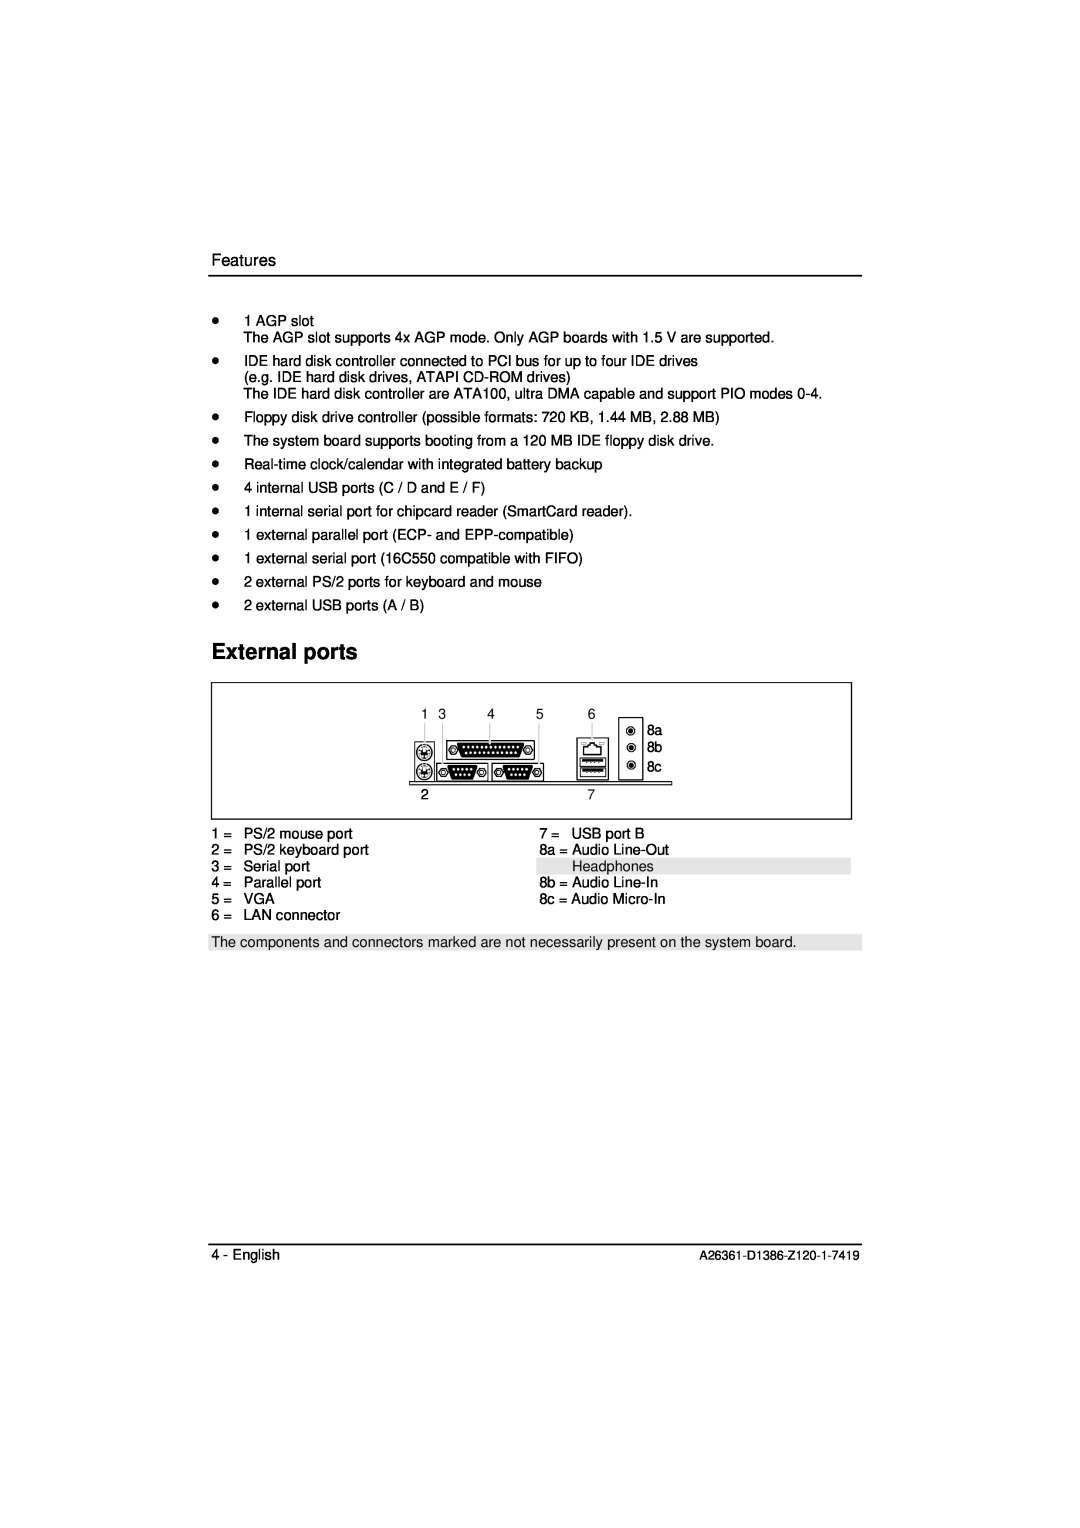 Fujitsu D1386 technical manual External ports, Features 